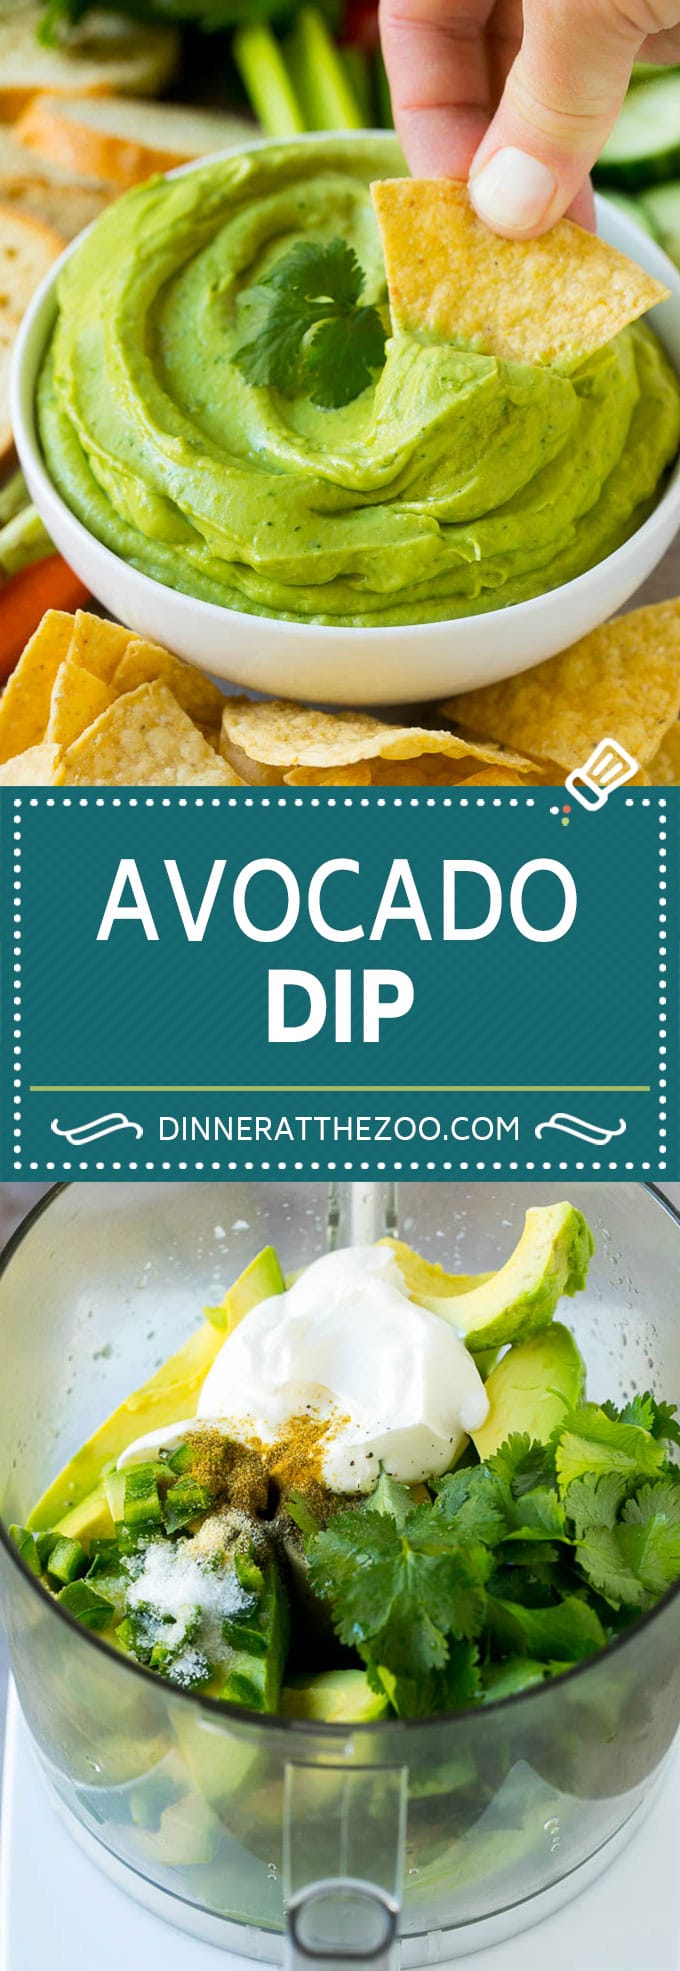 Avocado Dip Recipe | Healthy Avocado Recipe | Avocado Sauce #avocado #dip #appetizer #glutenfree #lowcarb #keto #dinneratthezoo #cleaneating